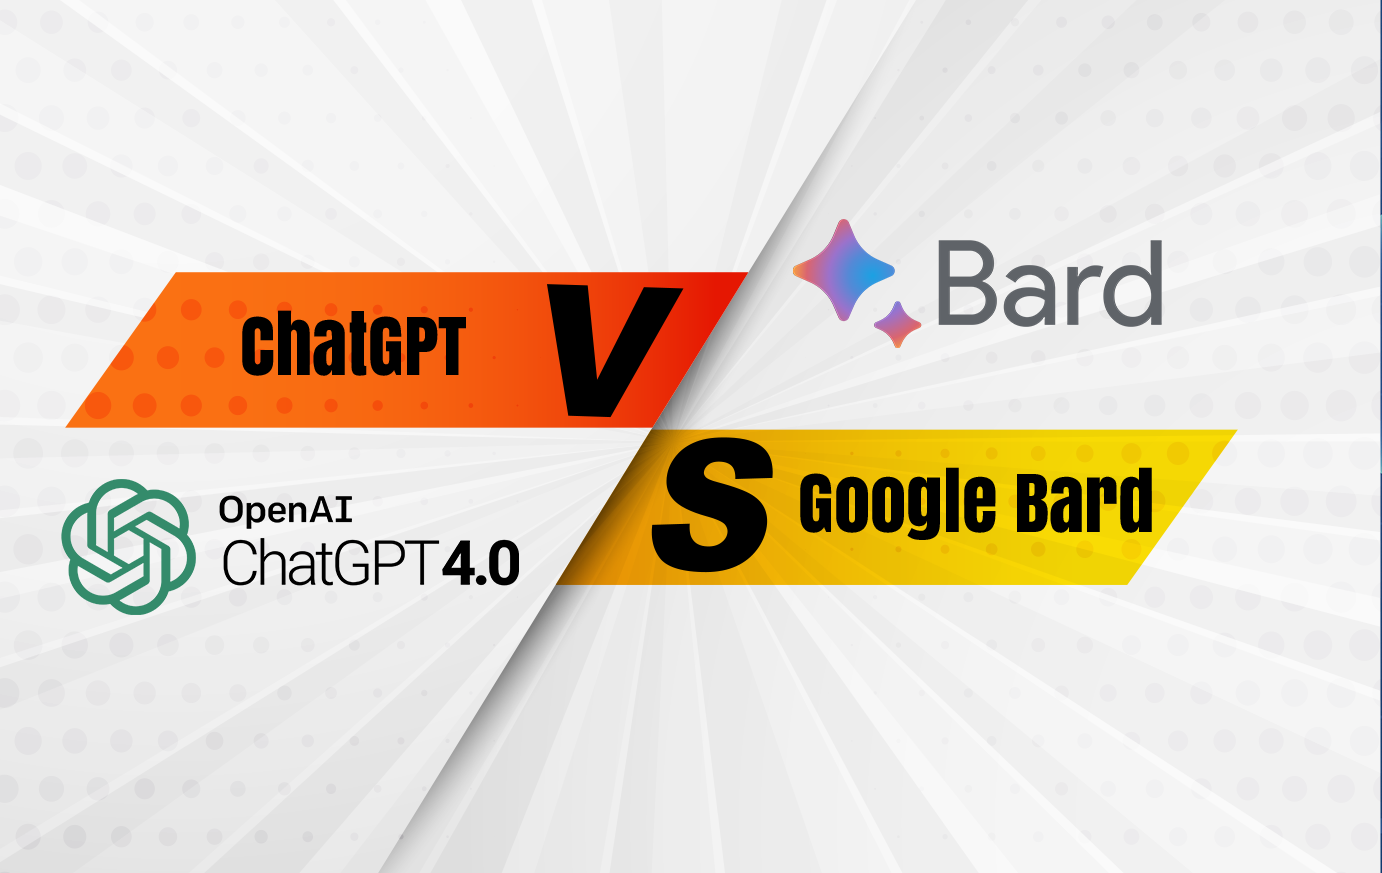 Idigital-agency-ChatGPT vs Google Bard